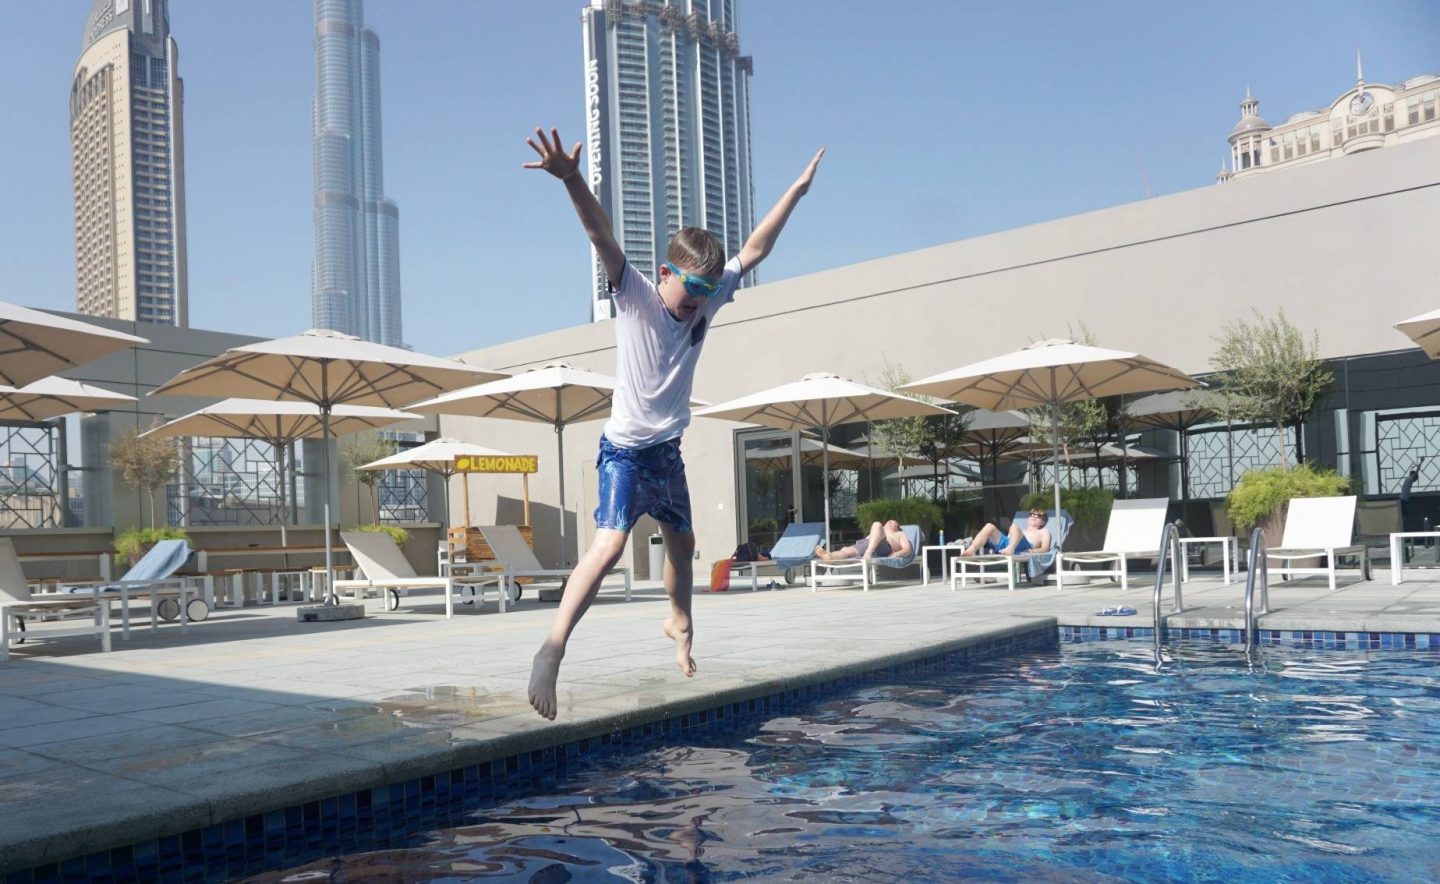 The Rove Downtown Dubai, A Wonderful Budget Hotel In Dubai www.extraordinarychaos.com